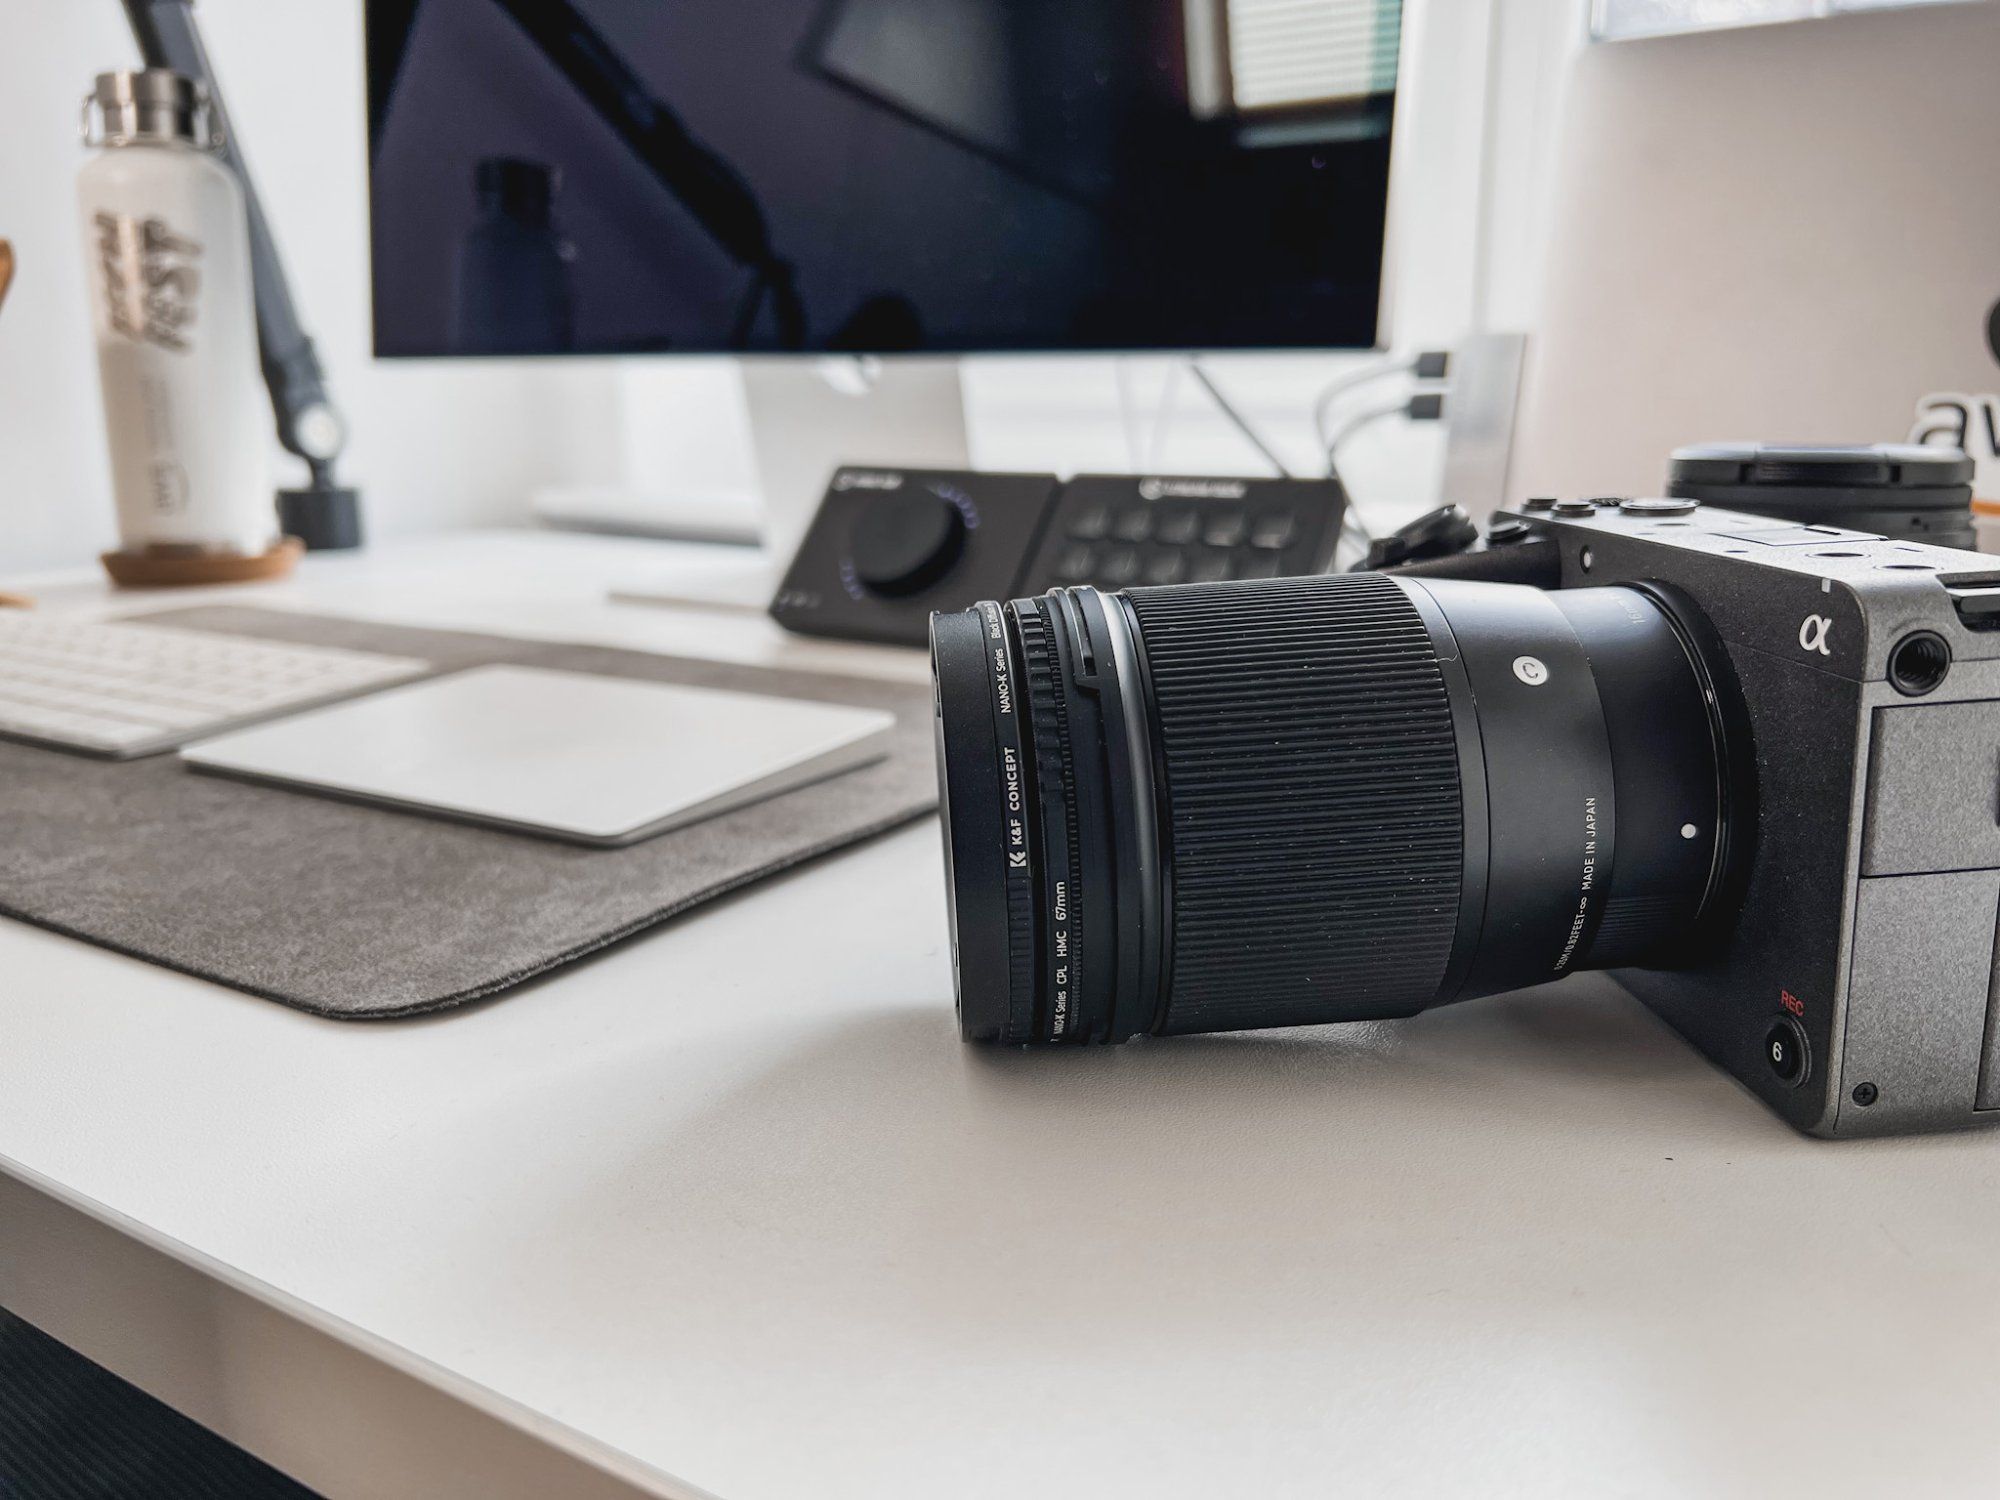 A Sony FX30 camera sitting on a desk